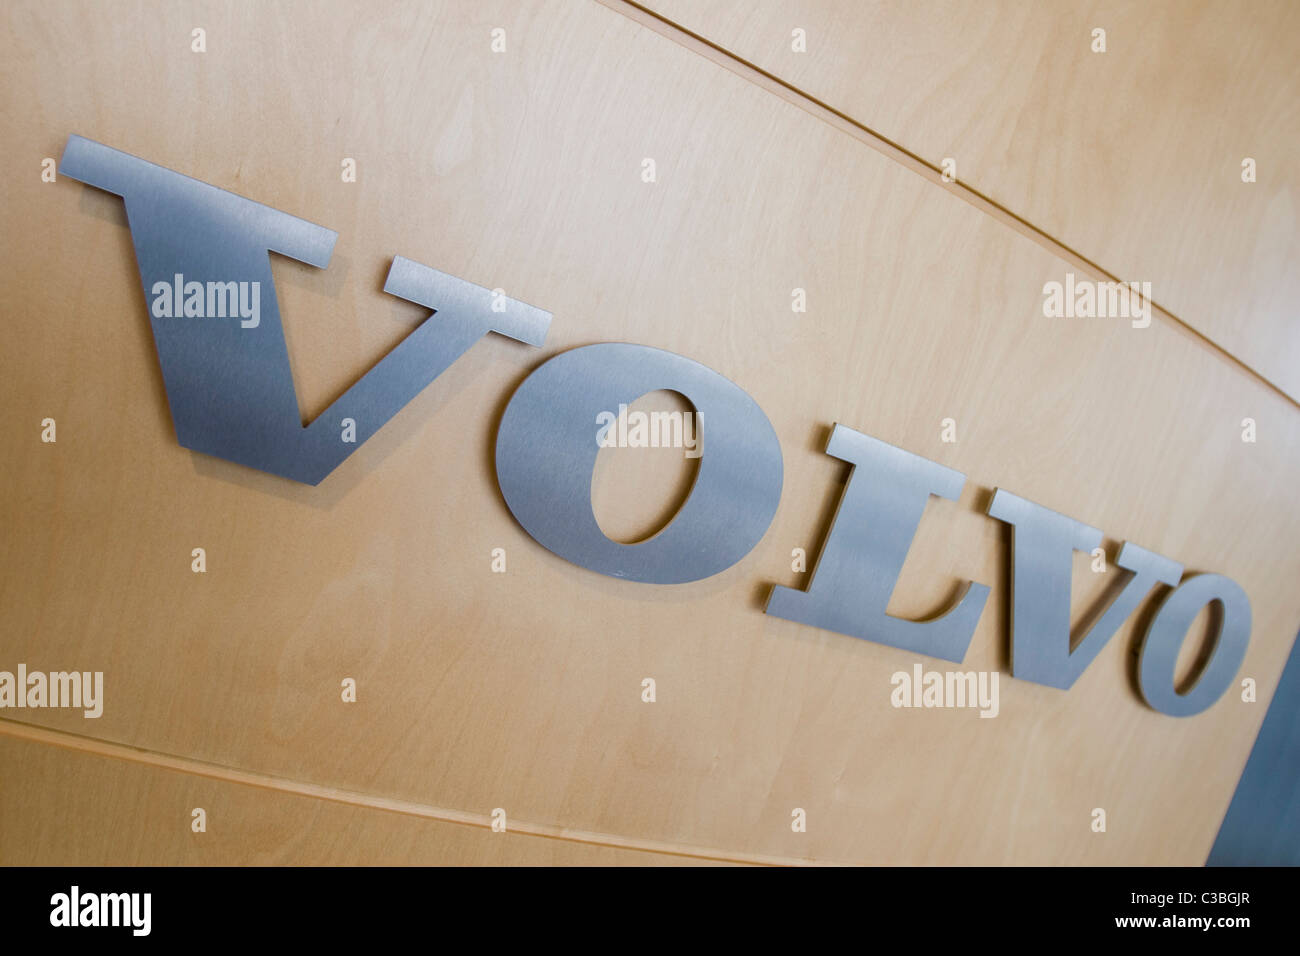 Vovo branding inside a showroom Stock Photo